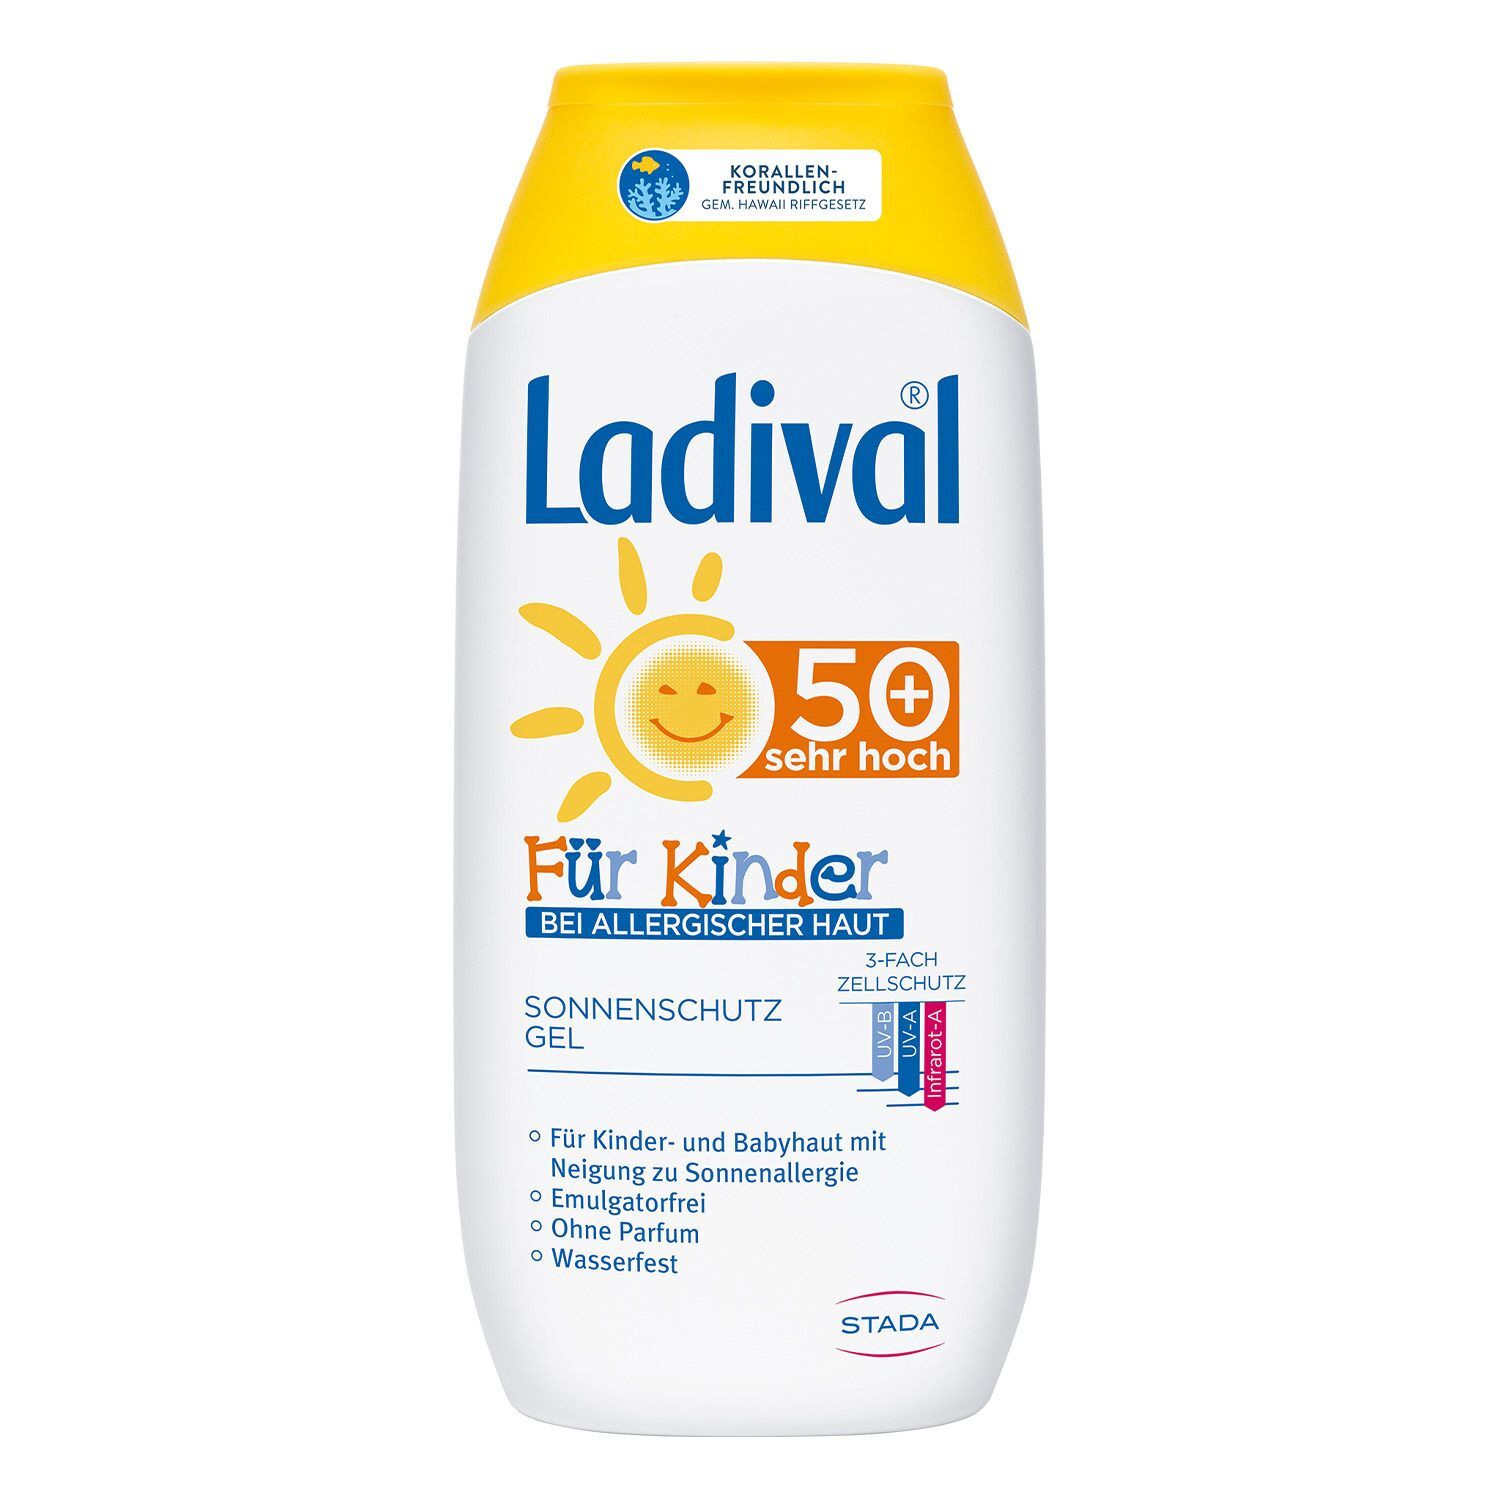 Ladival® Kinder Sonnenschutz Gel bei allergischer Haut LSF 50+